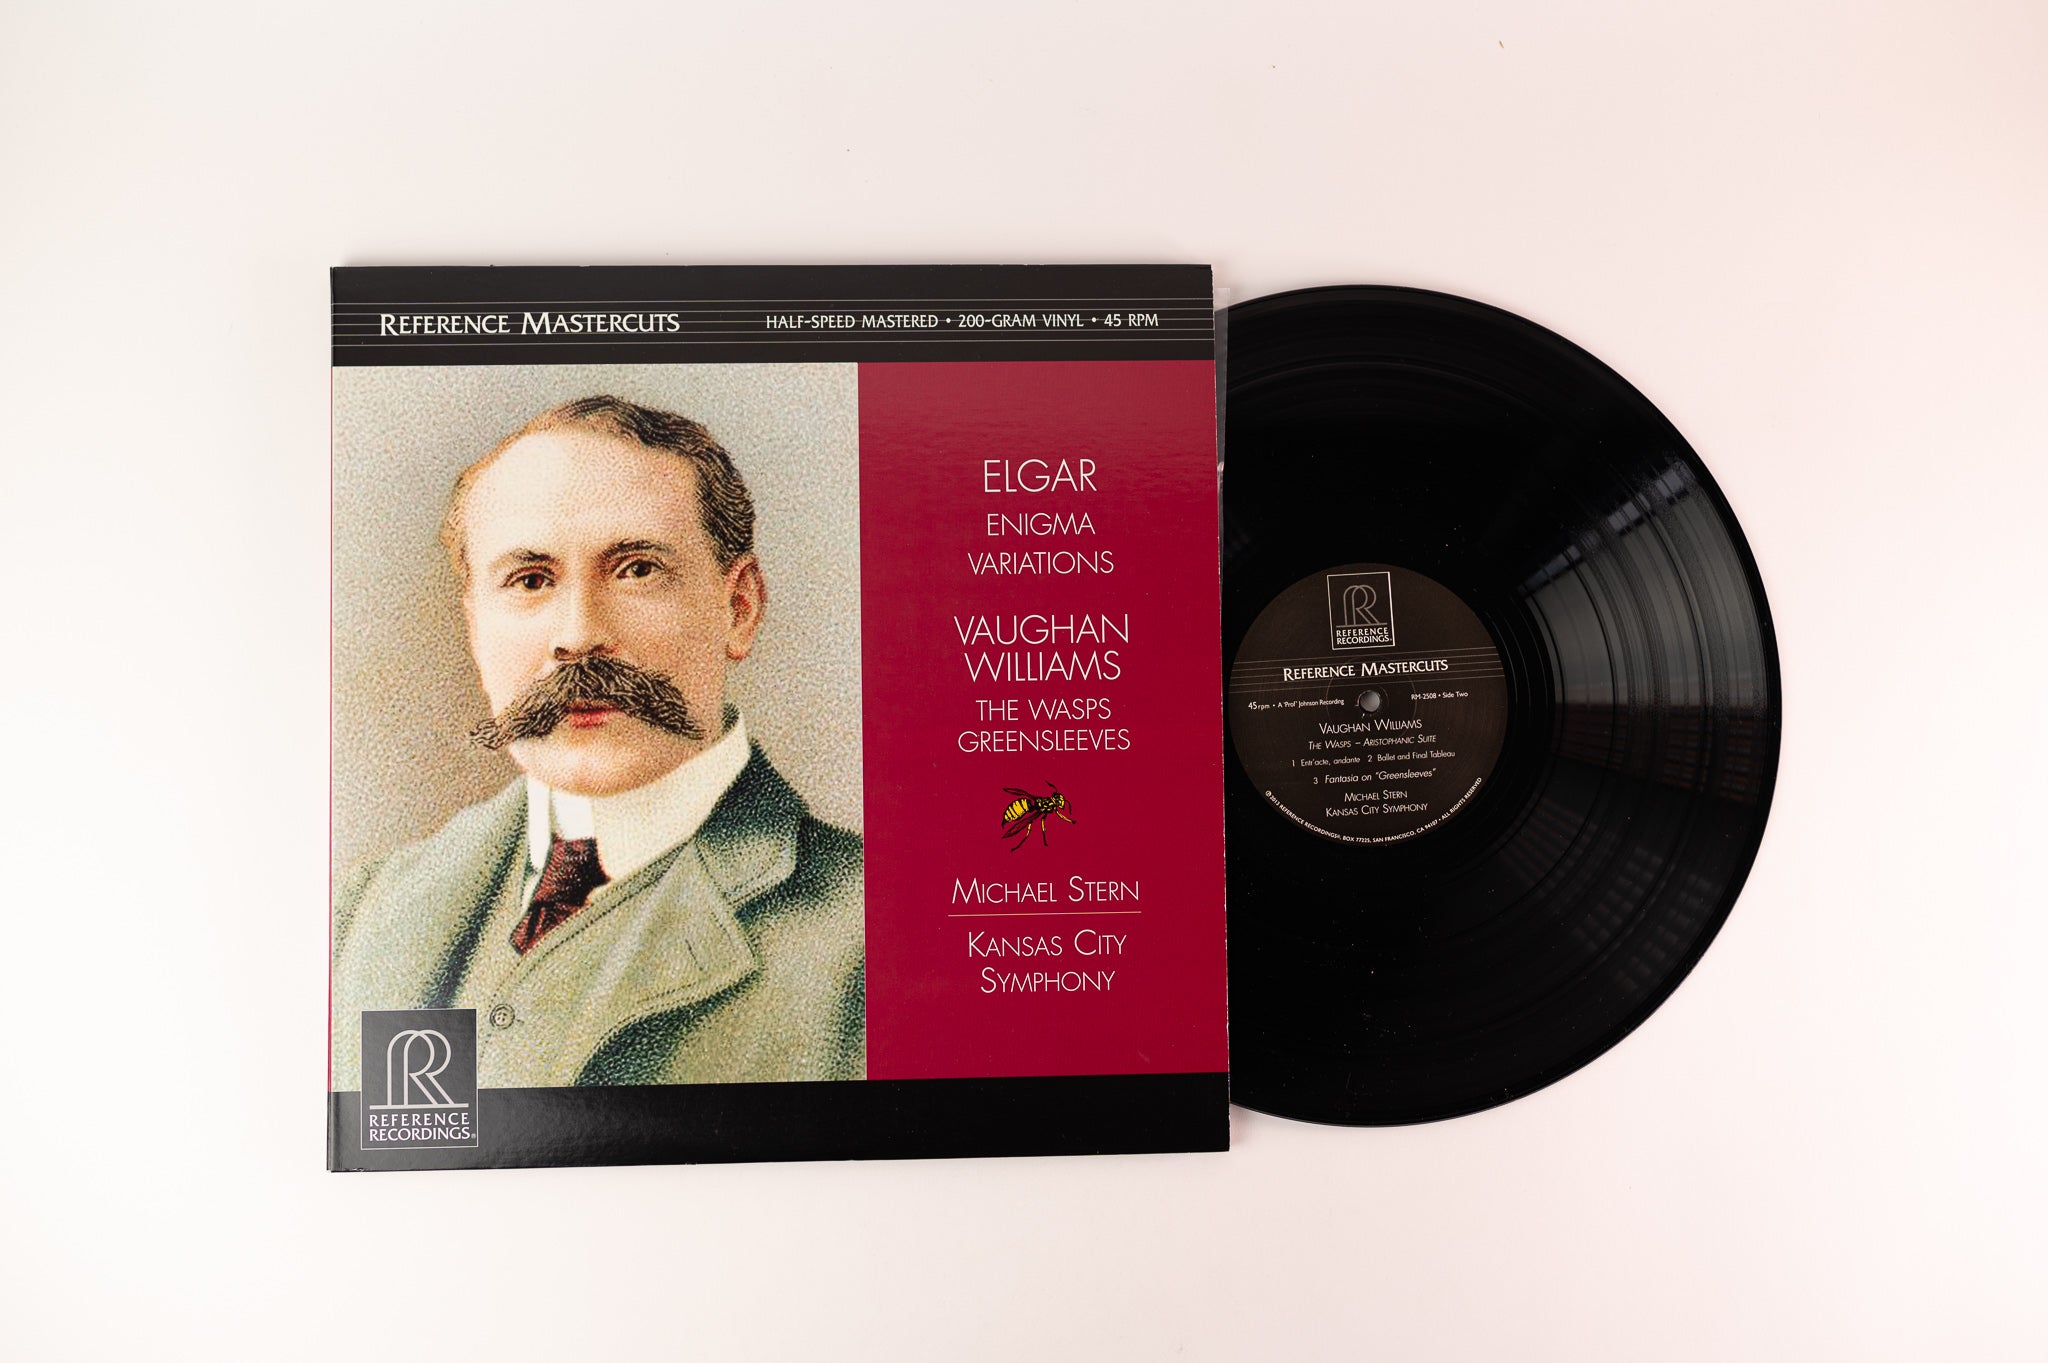 Sir Edward Elgar - Enigma Variations / The Wasps / Greensleeves on Reference Recordings 200 Gram